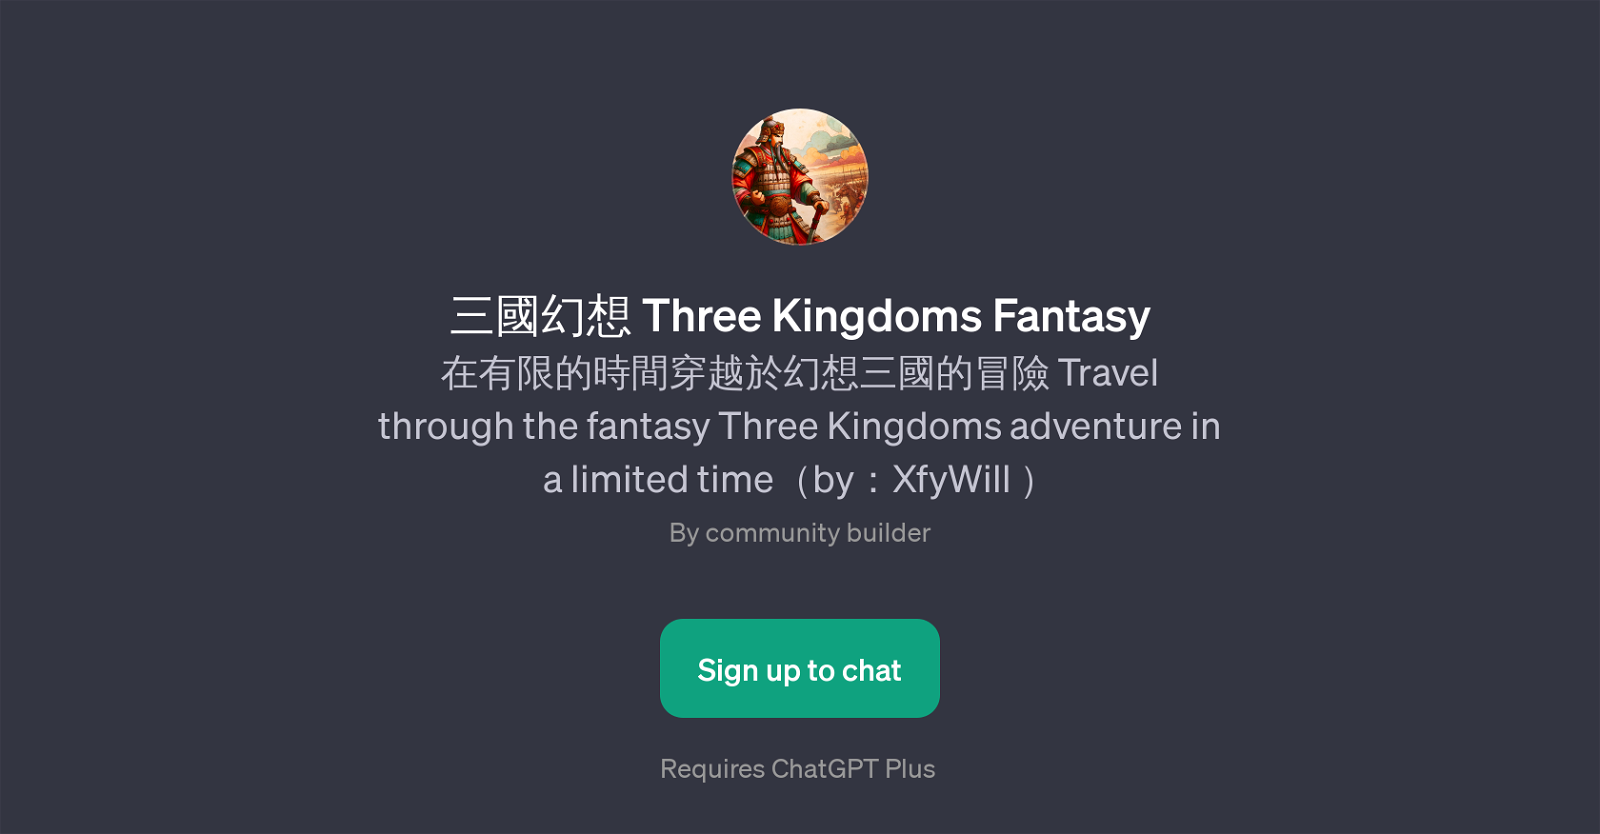 Three Kingdoms Fantasy website